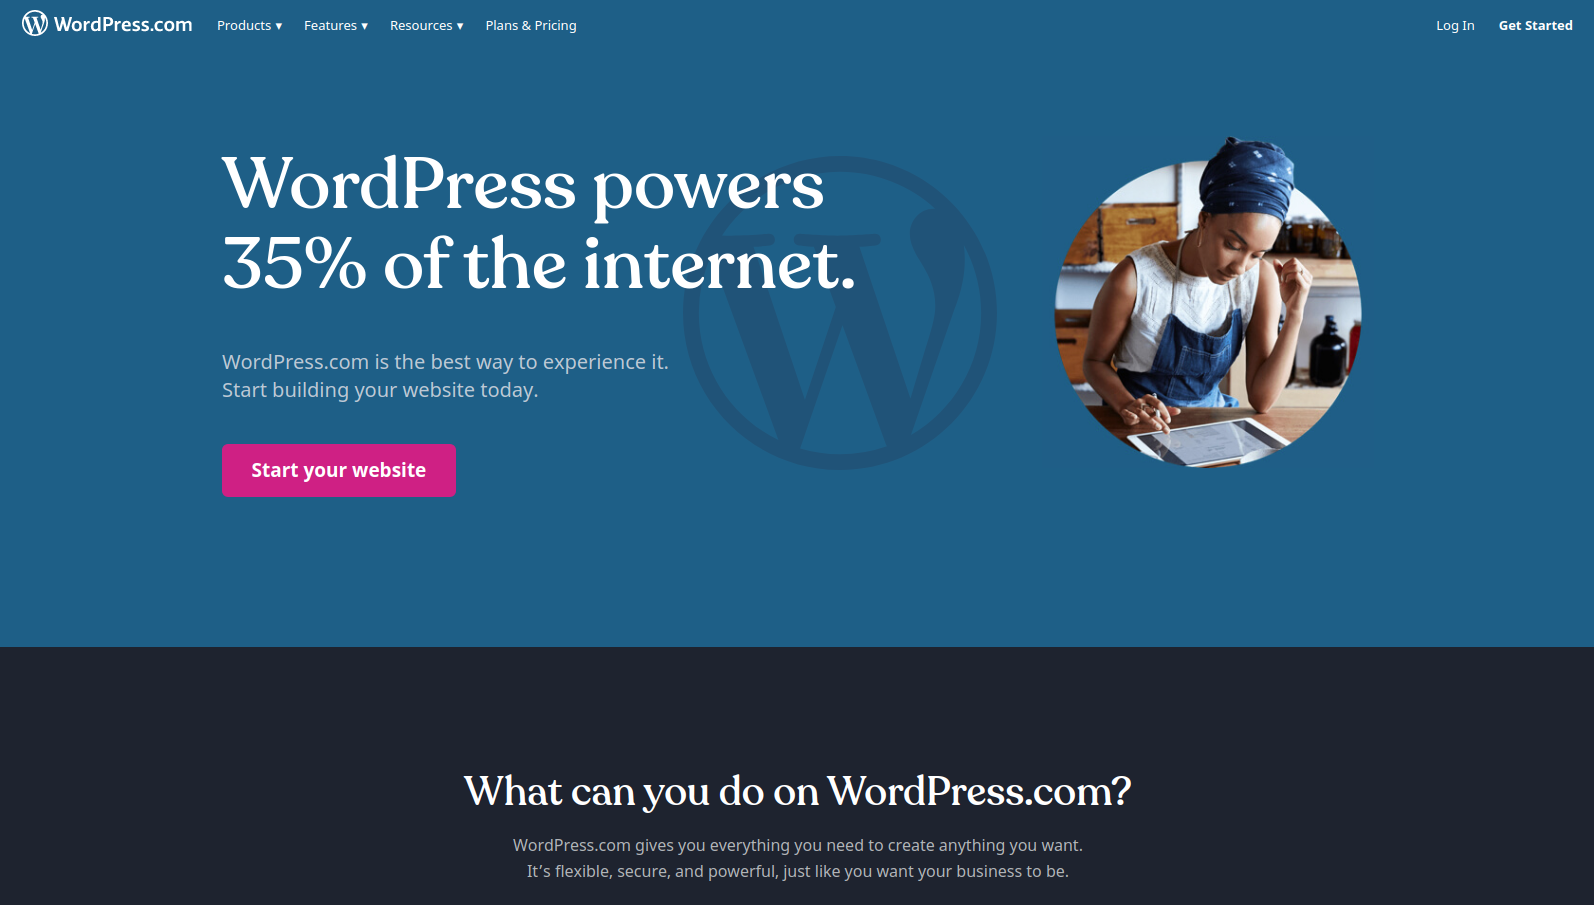 wordpress-com